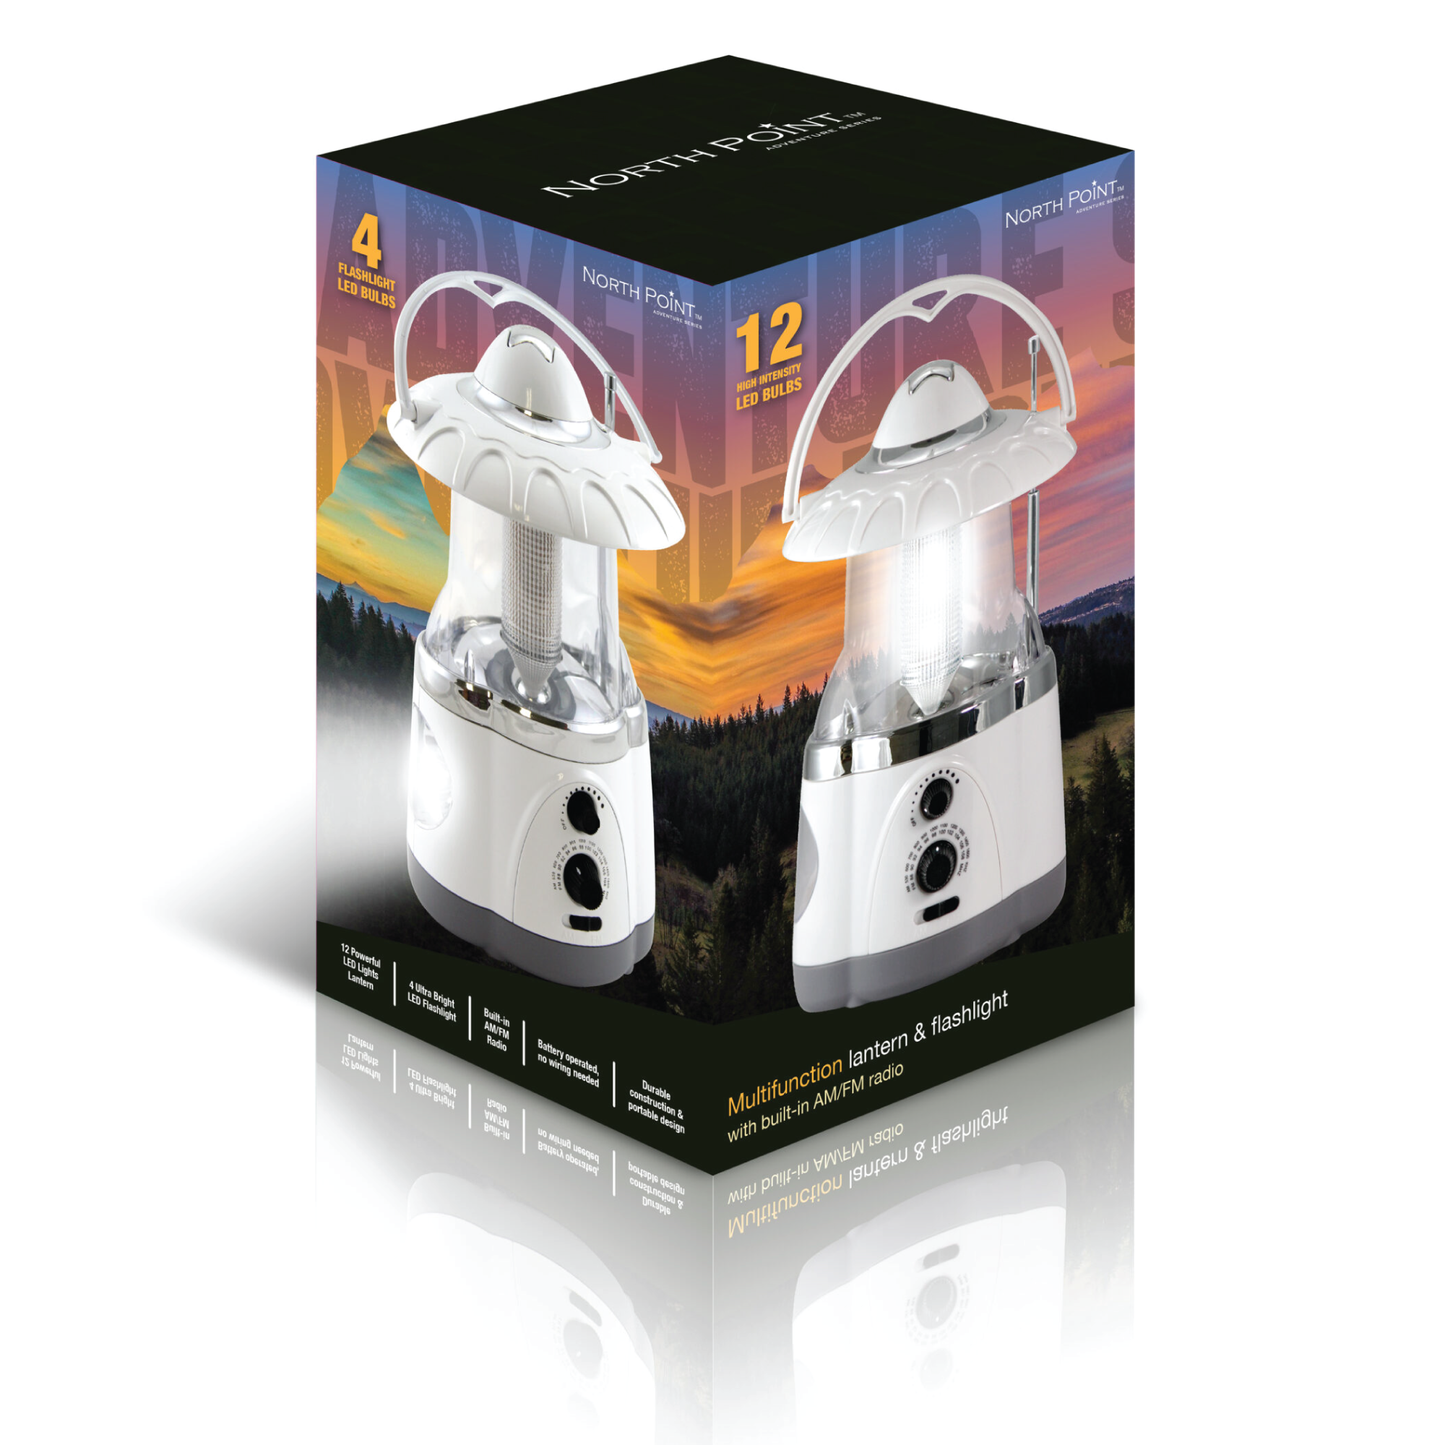 The North Point® white AM/FM radio lantern box image showcases a white camping lantern illuminating with a white light.